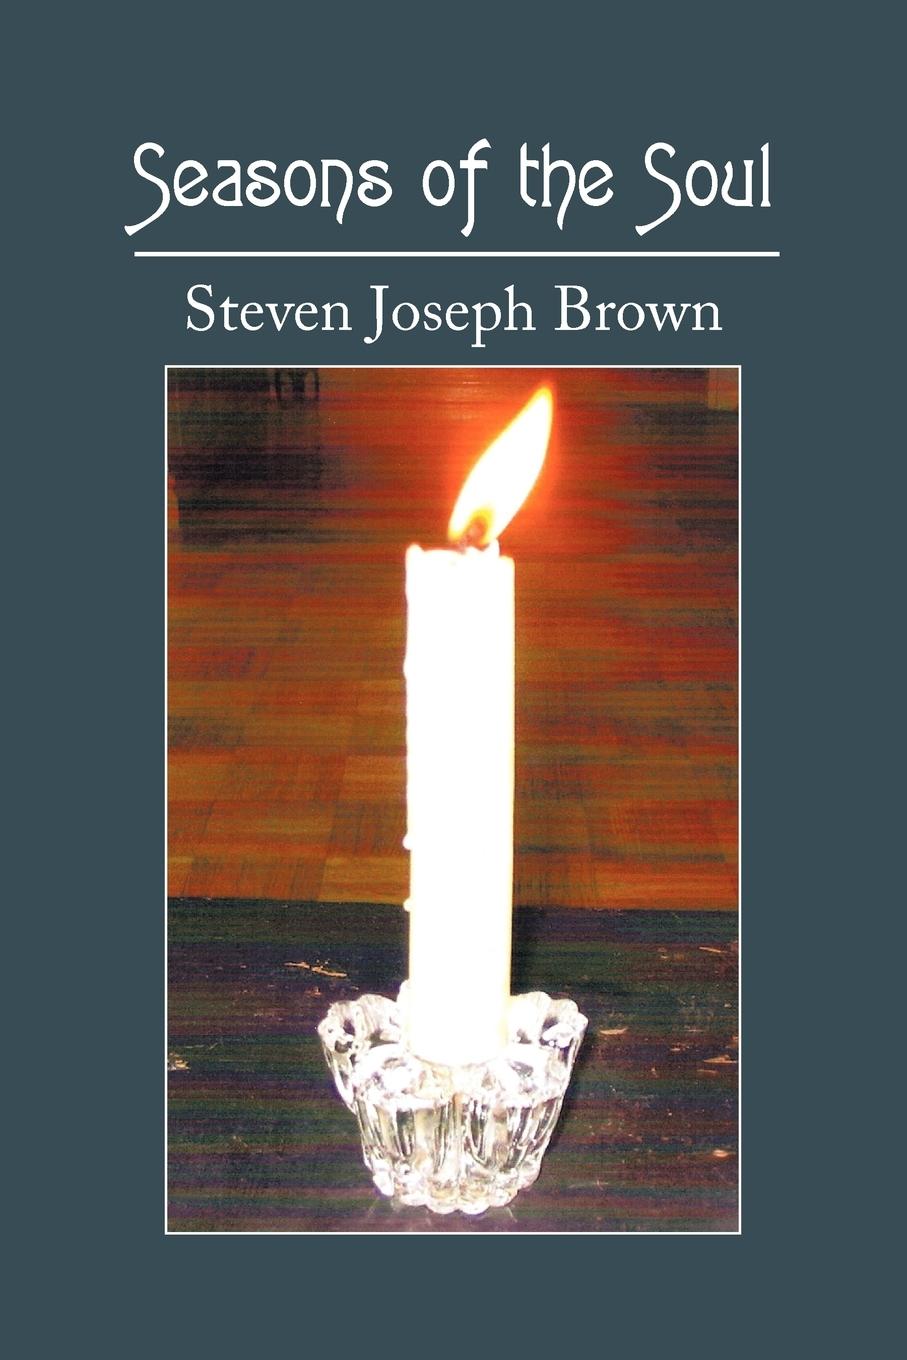 Seasons of the Soul - Steven Joseph Brown, Joseph Brown Steven Joseph Brown